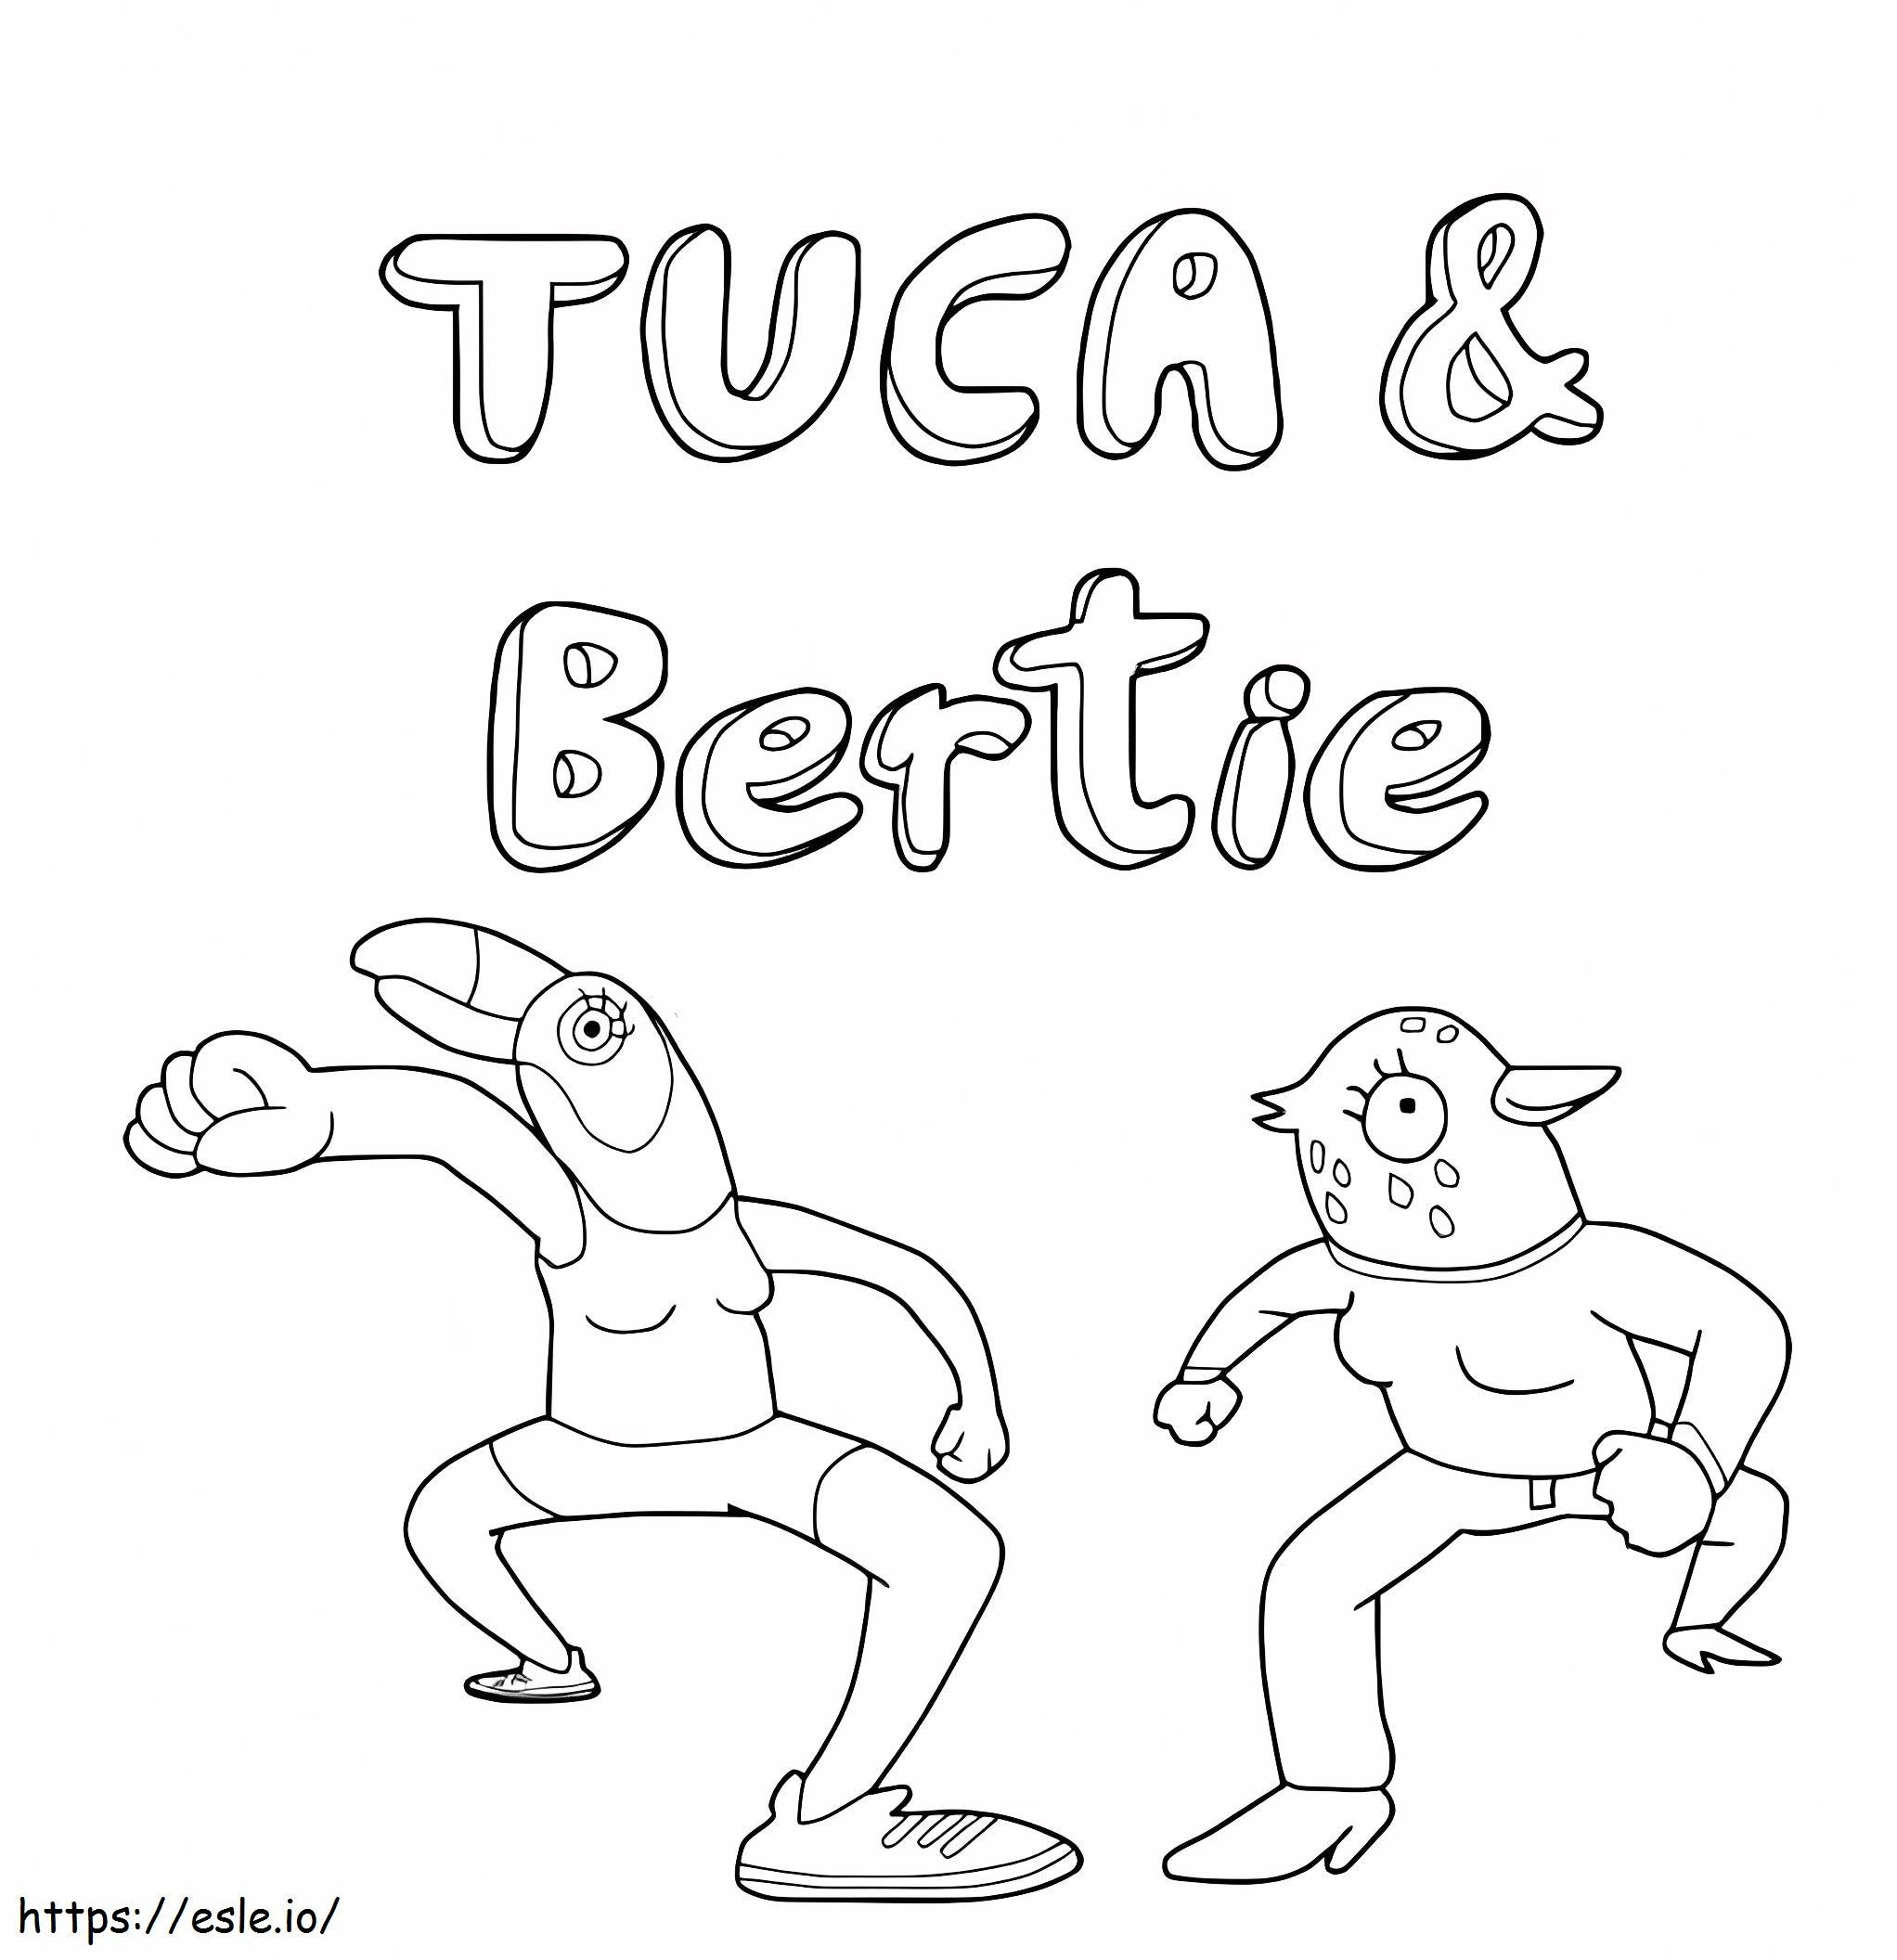 Zabawny Tuca i Bertie kolorowanka